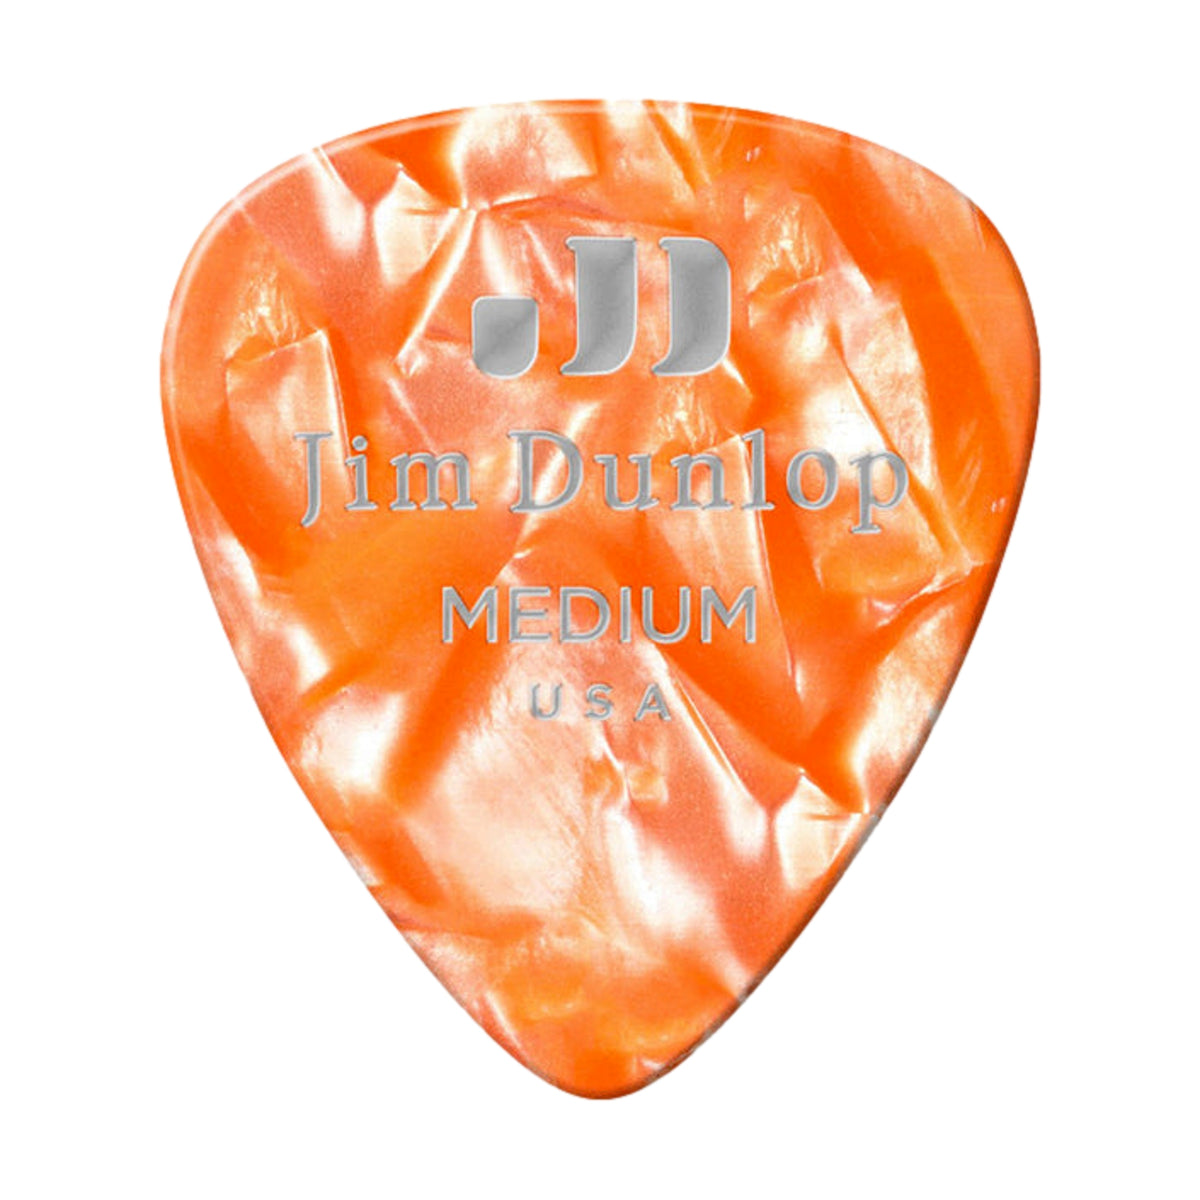 Dunlop Orange Pearl Classics Medium Guitar Pick